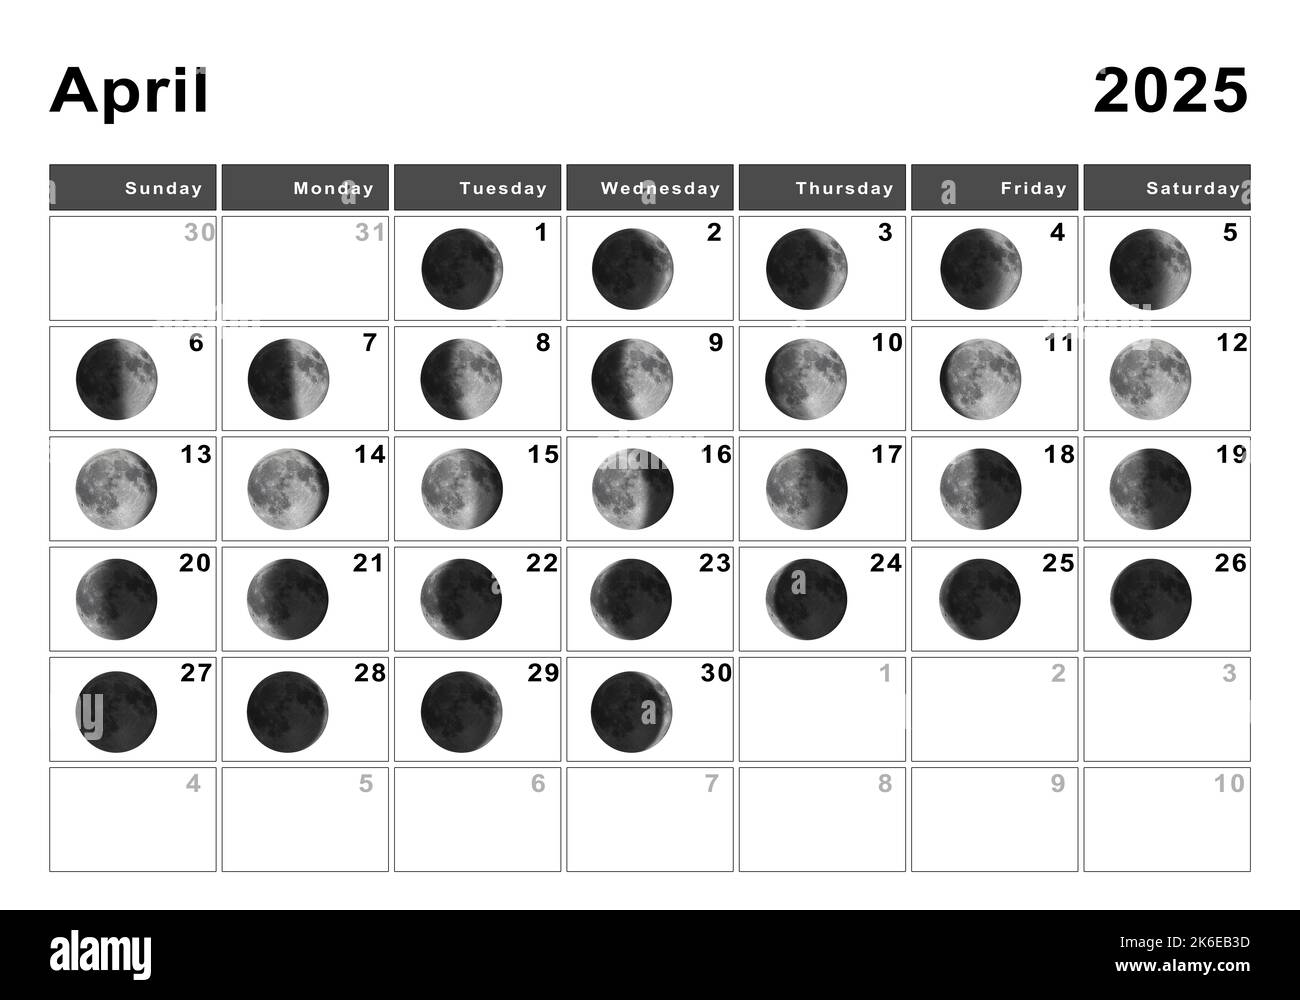 April 2025 Lunar Calendar Moon Cycles Moon Phases Stock Photo Alamy